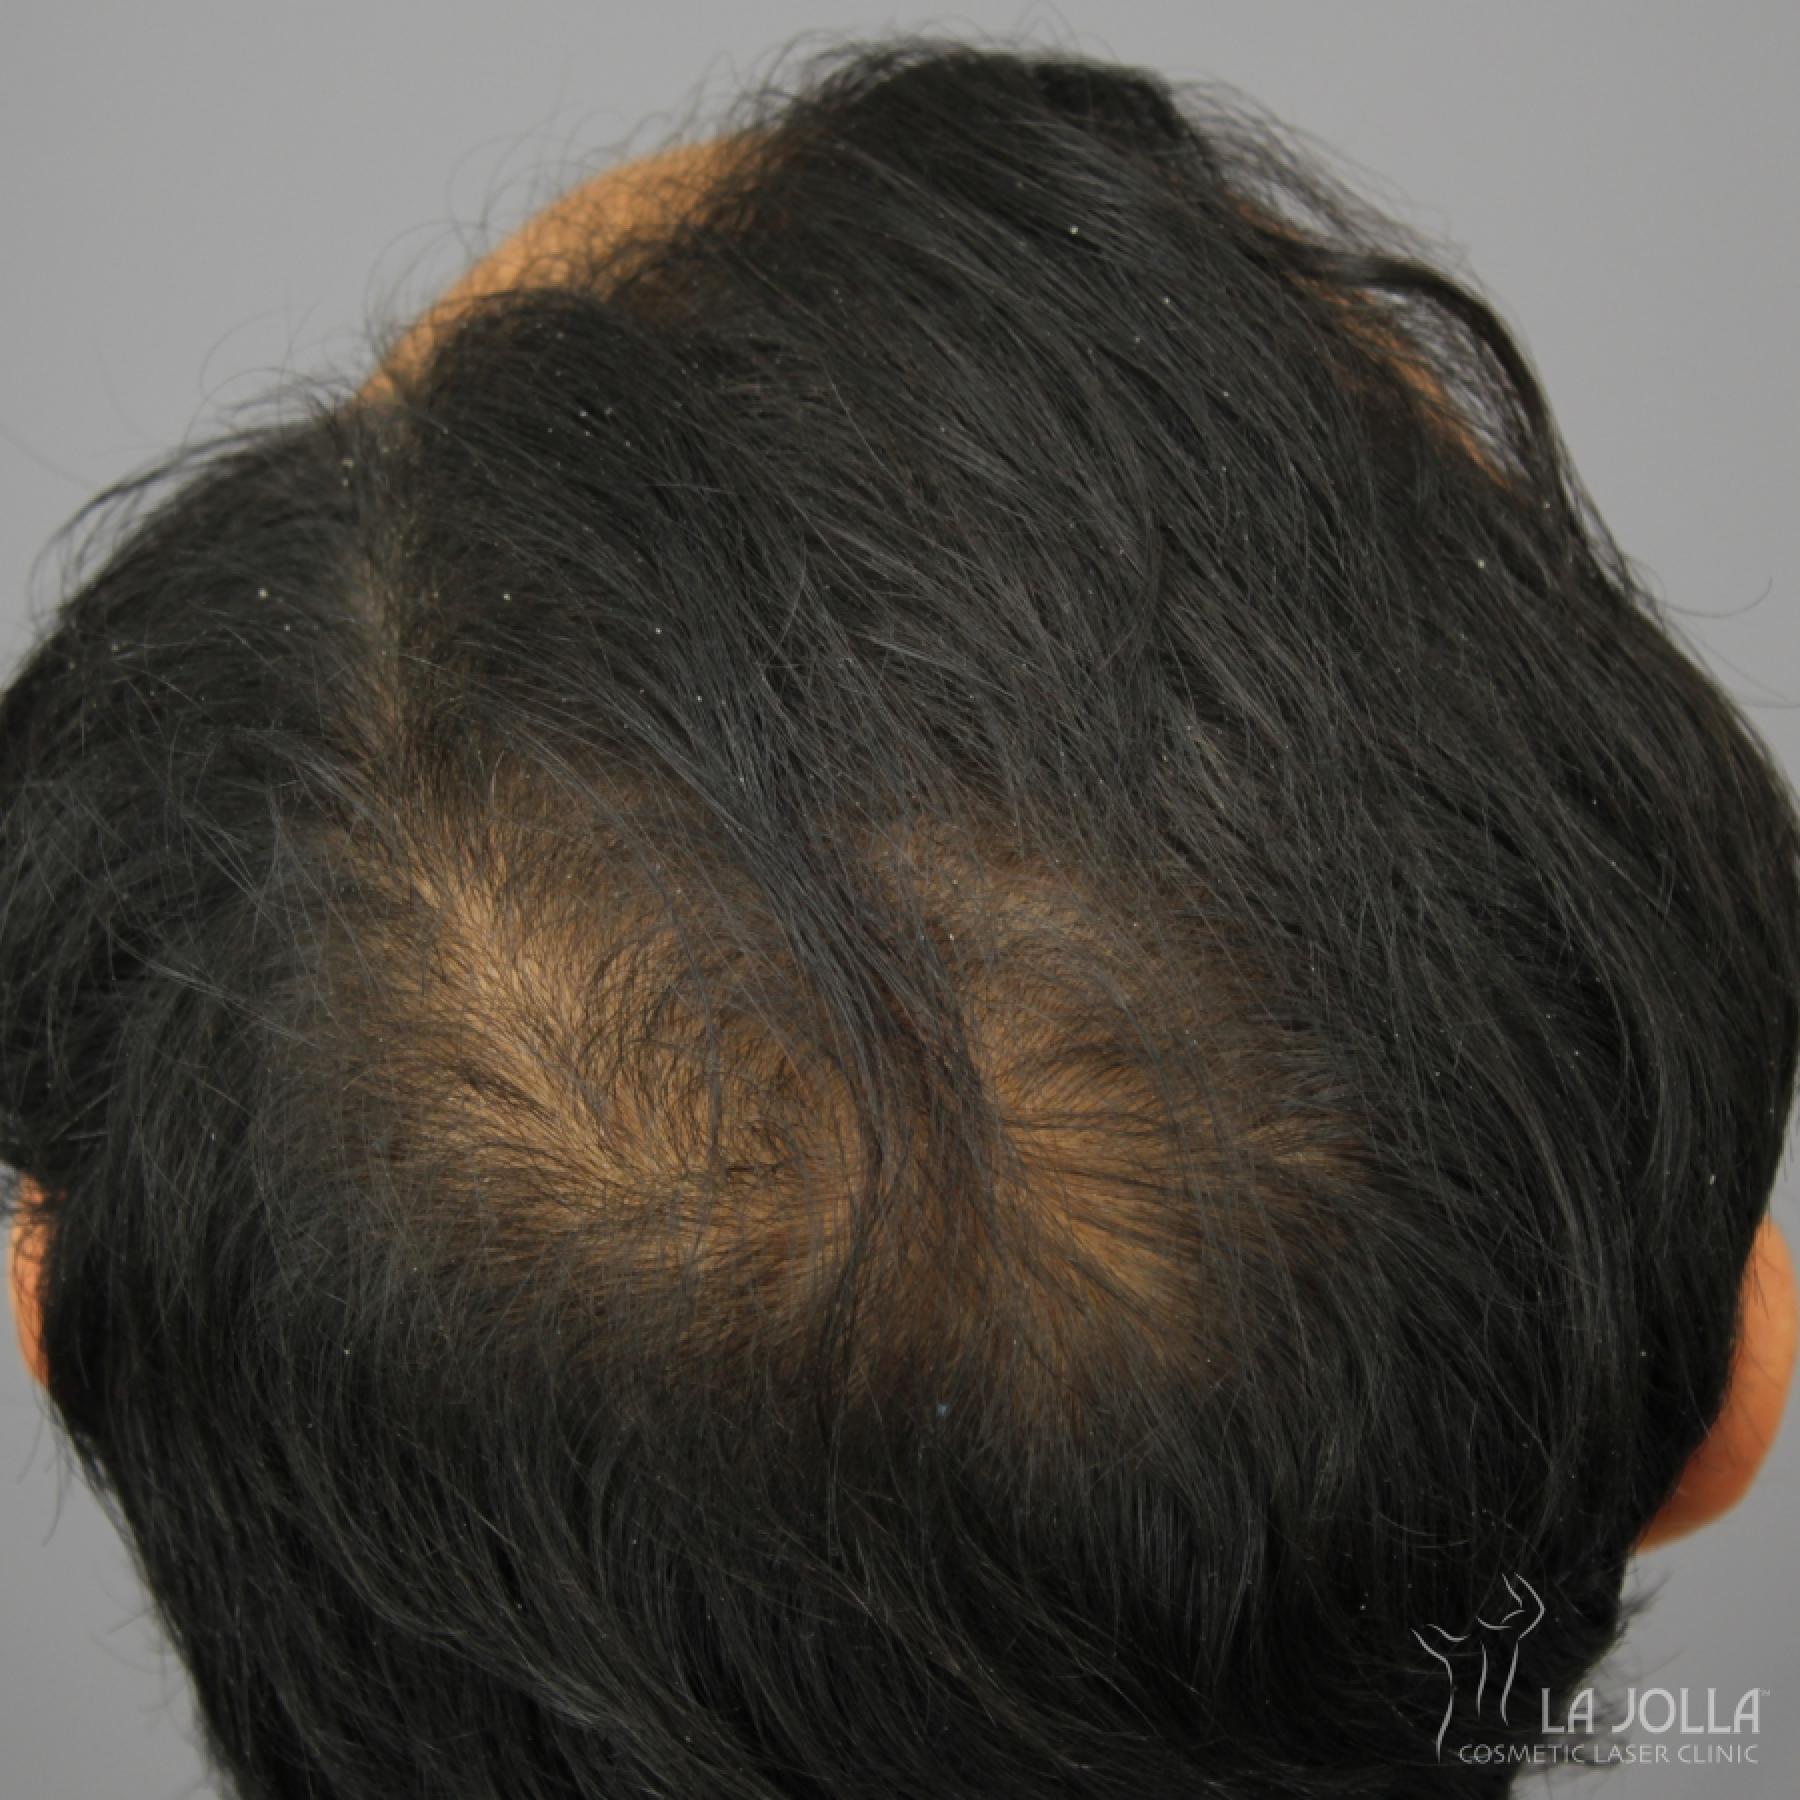 Hair Restoration: Patient 5 - After 1